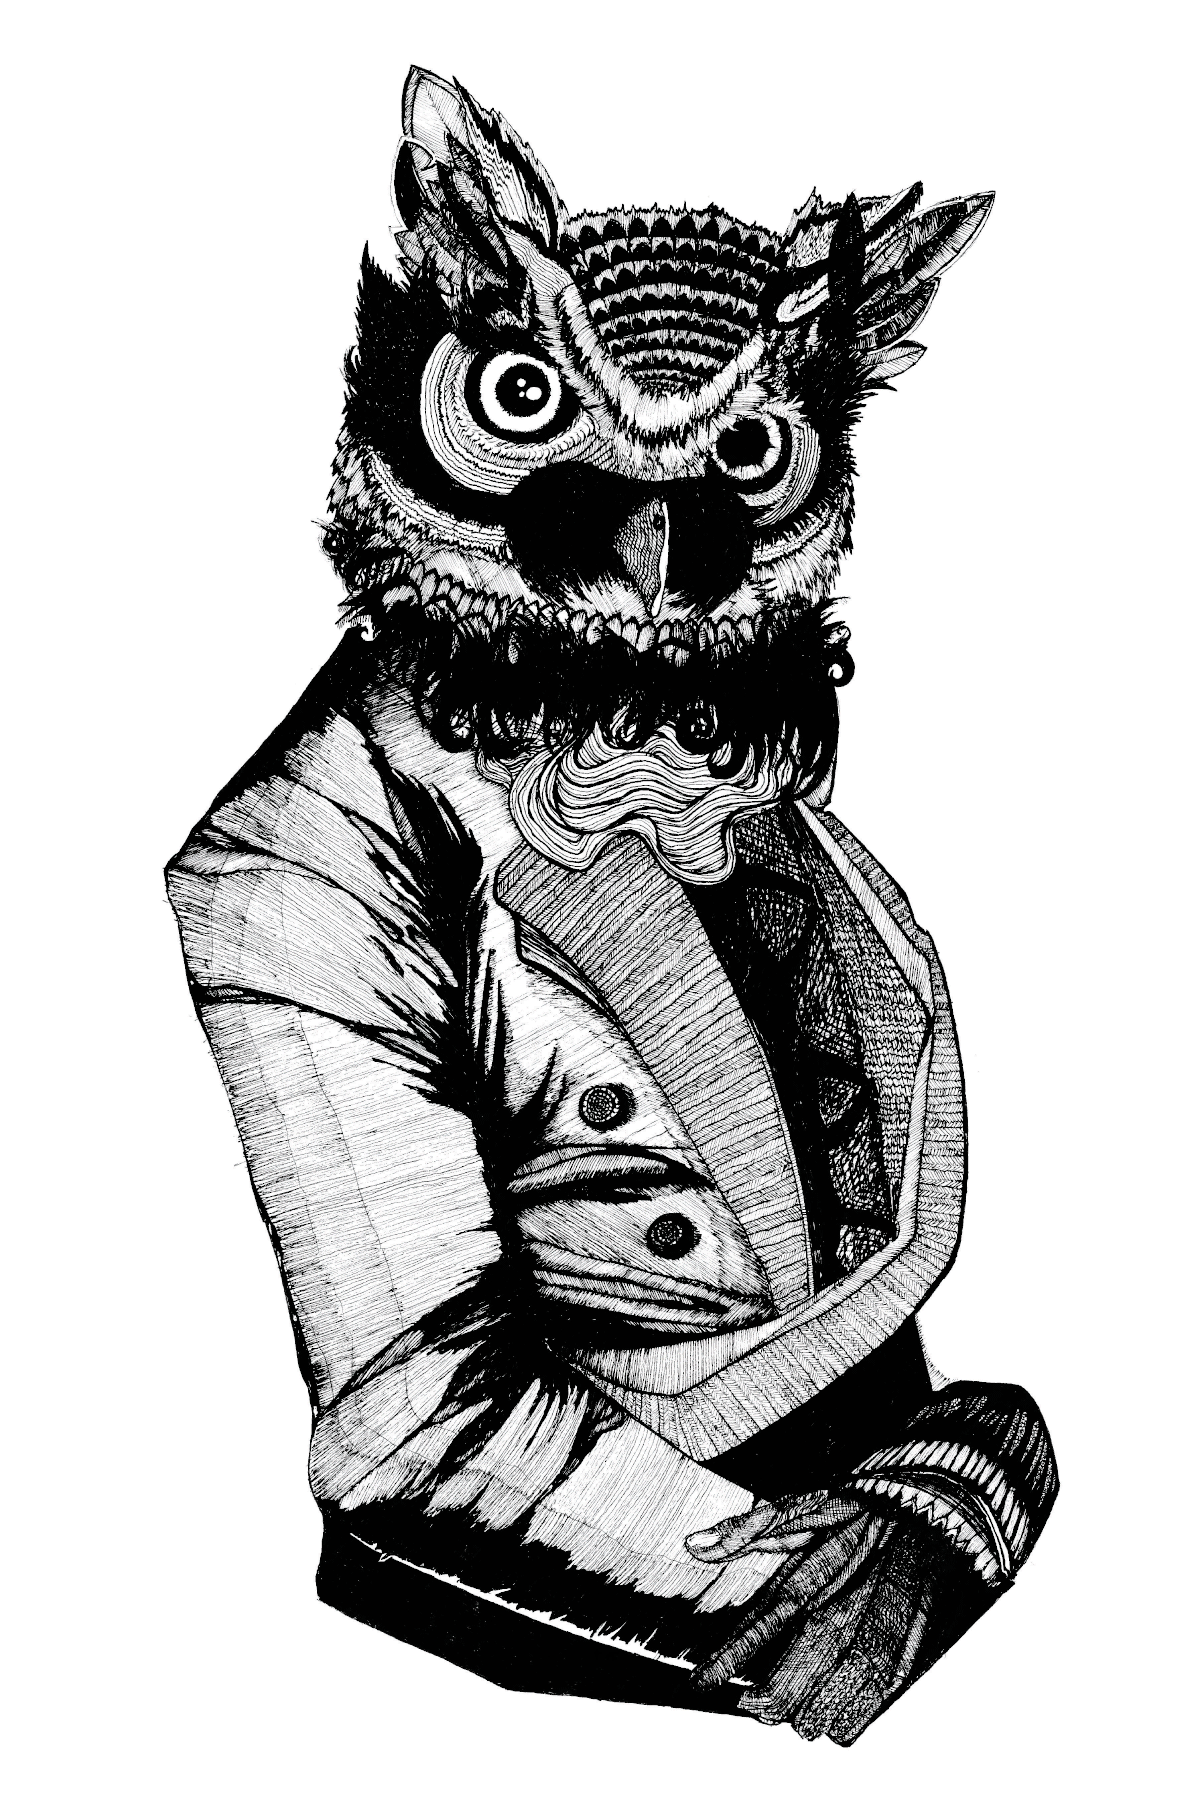 human owl hybrid inspiration engaged Character blackandwhite grayscale ink ipadpro